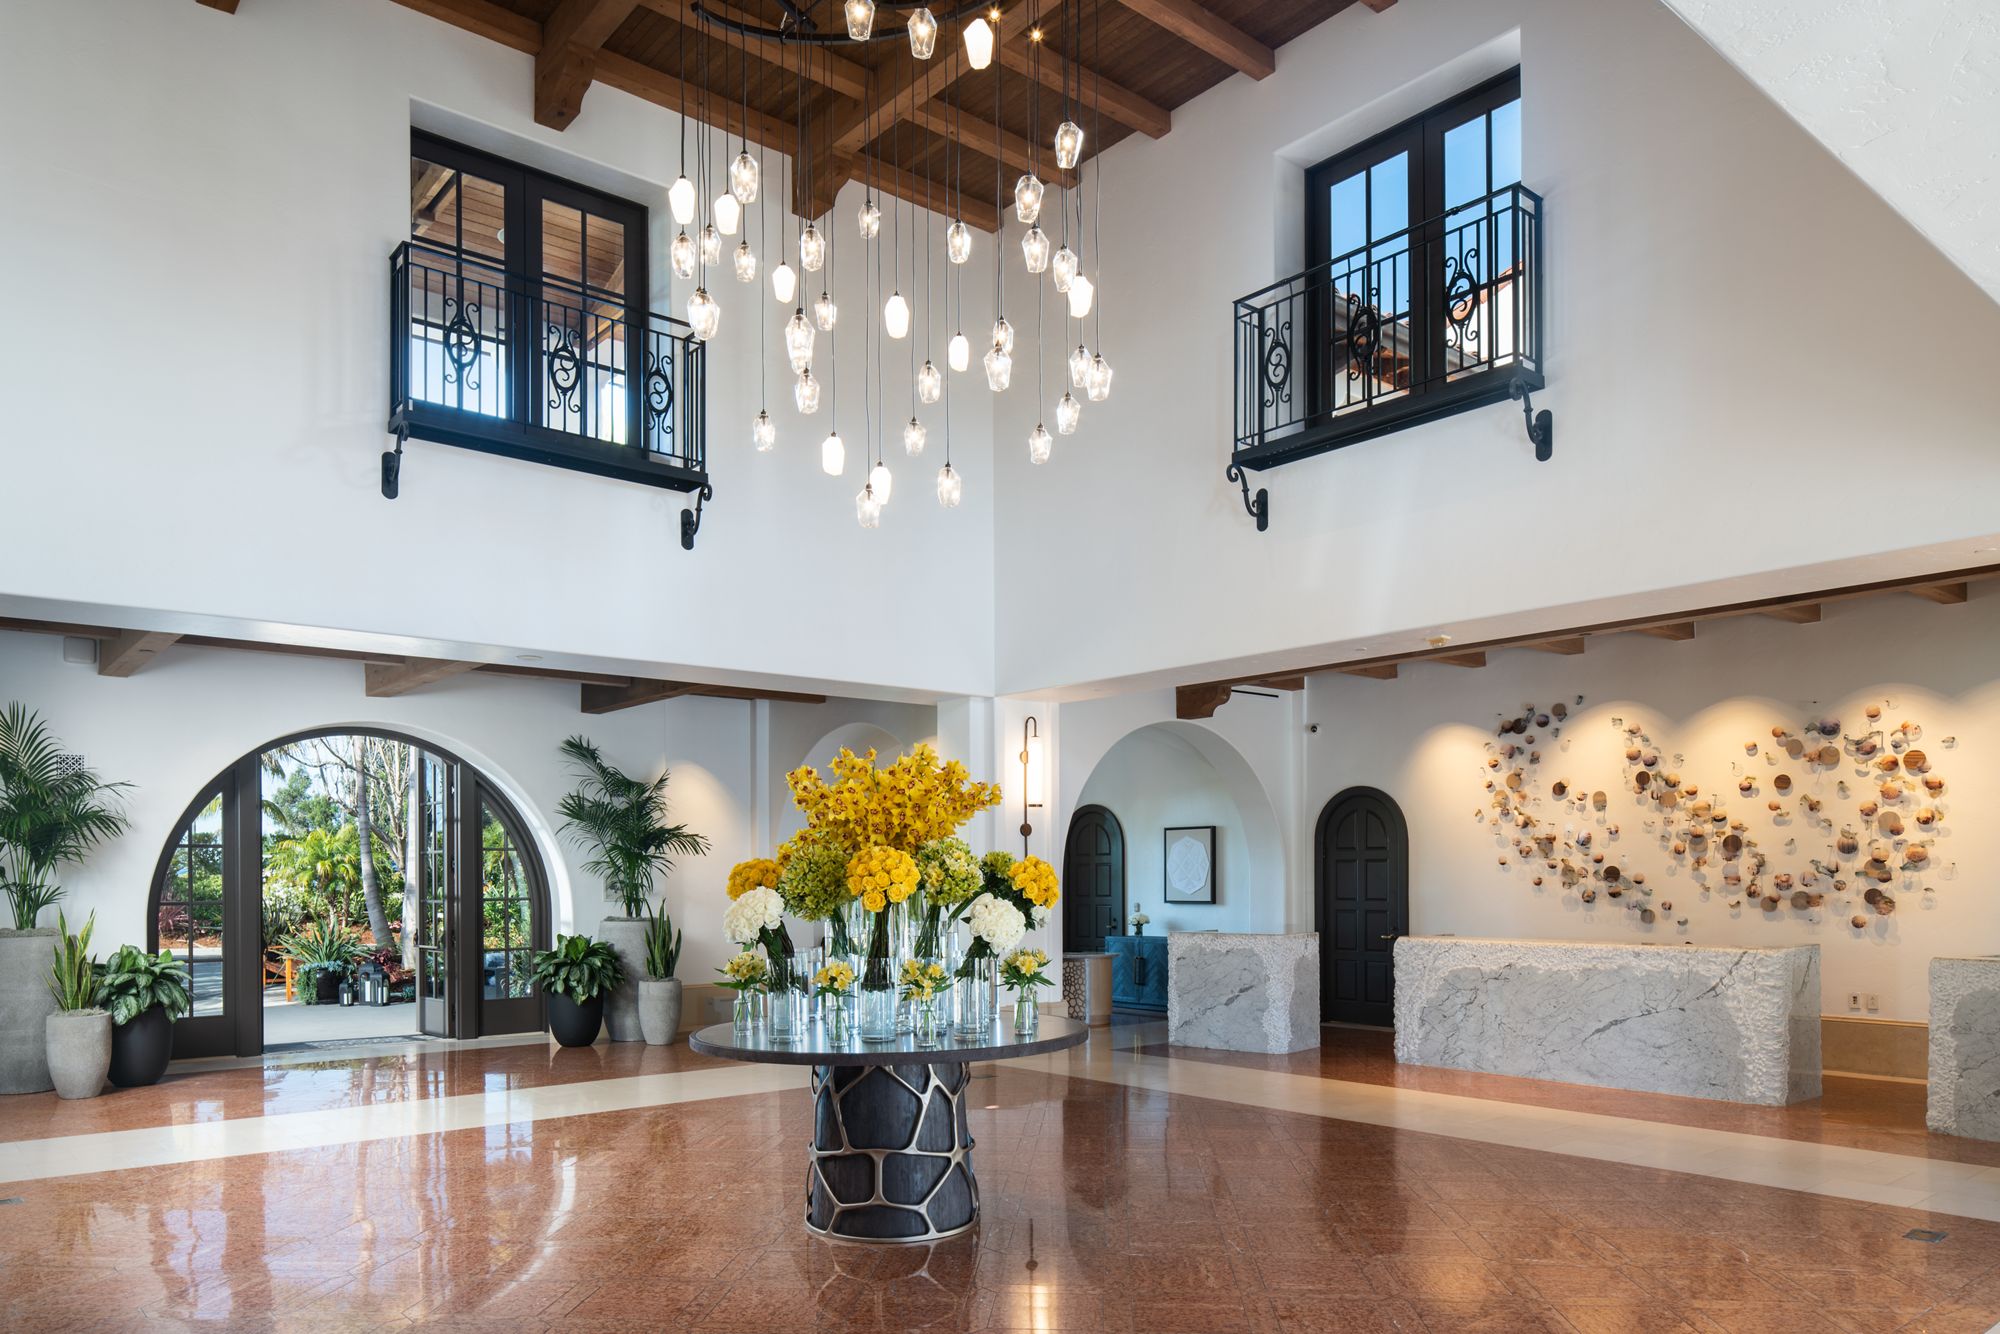 Top 3 Spanish Colonial Style Hotels in Santa Barbara 9